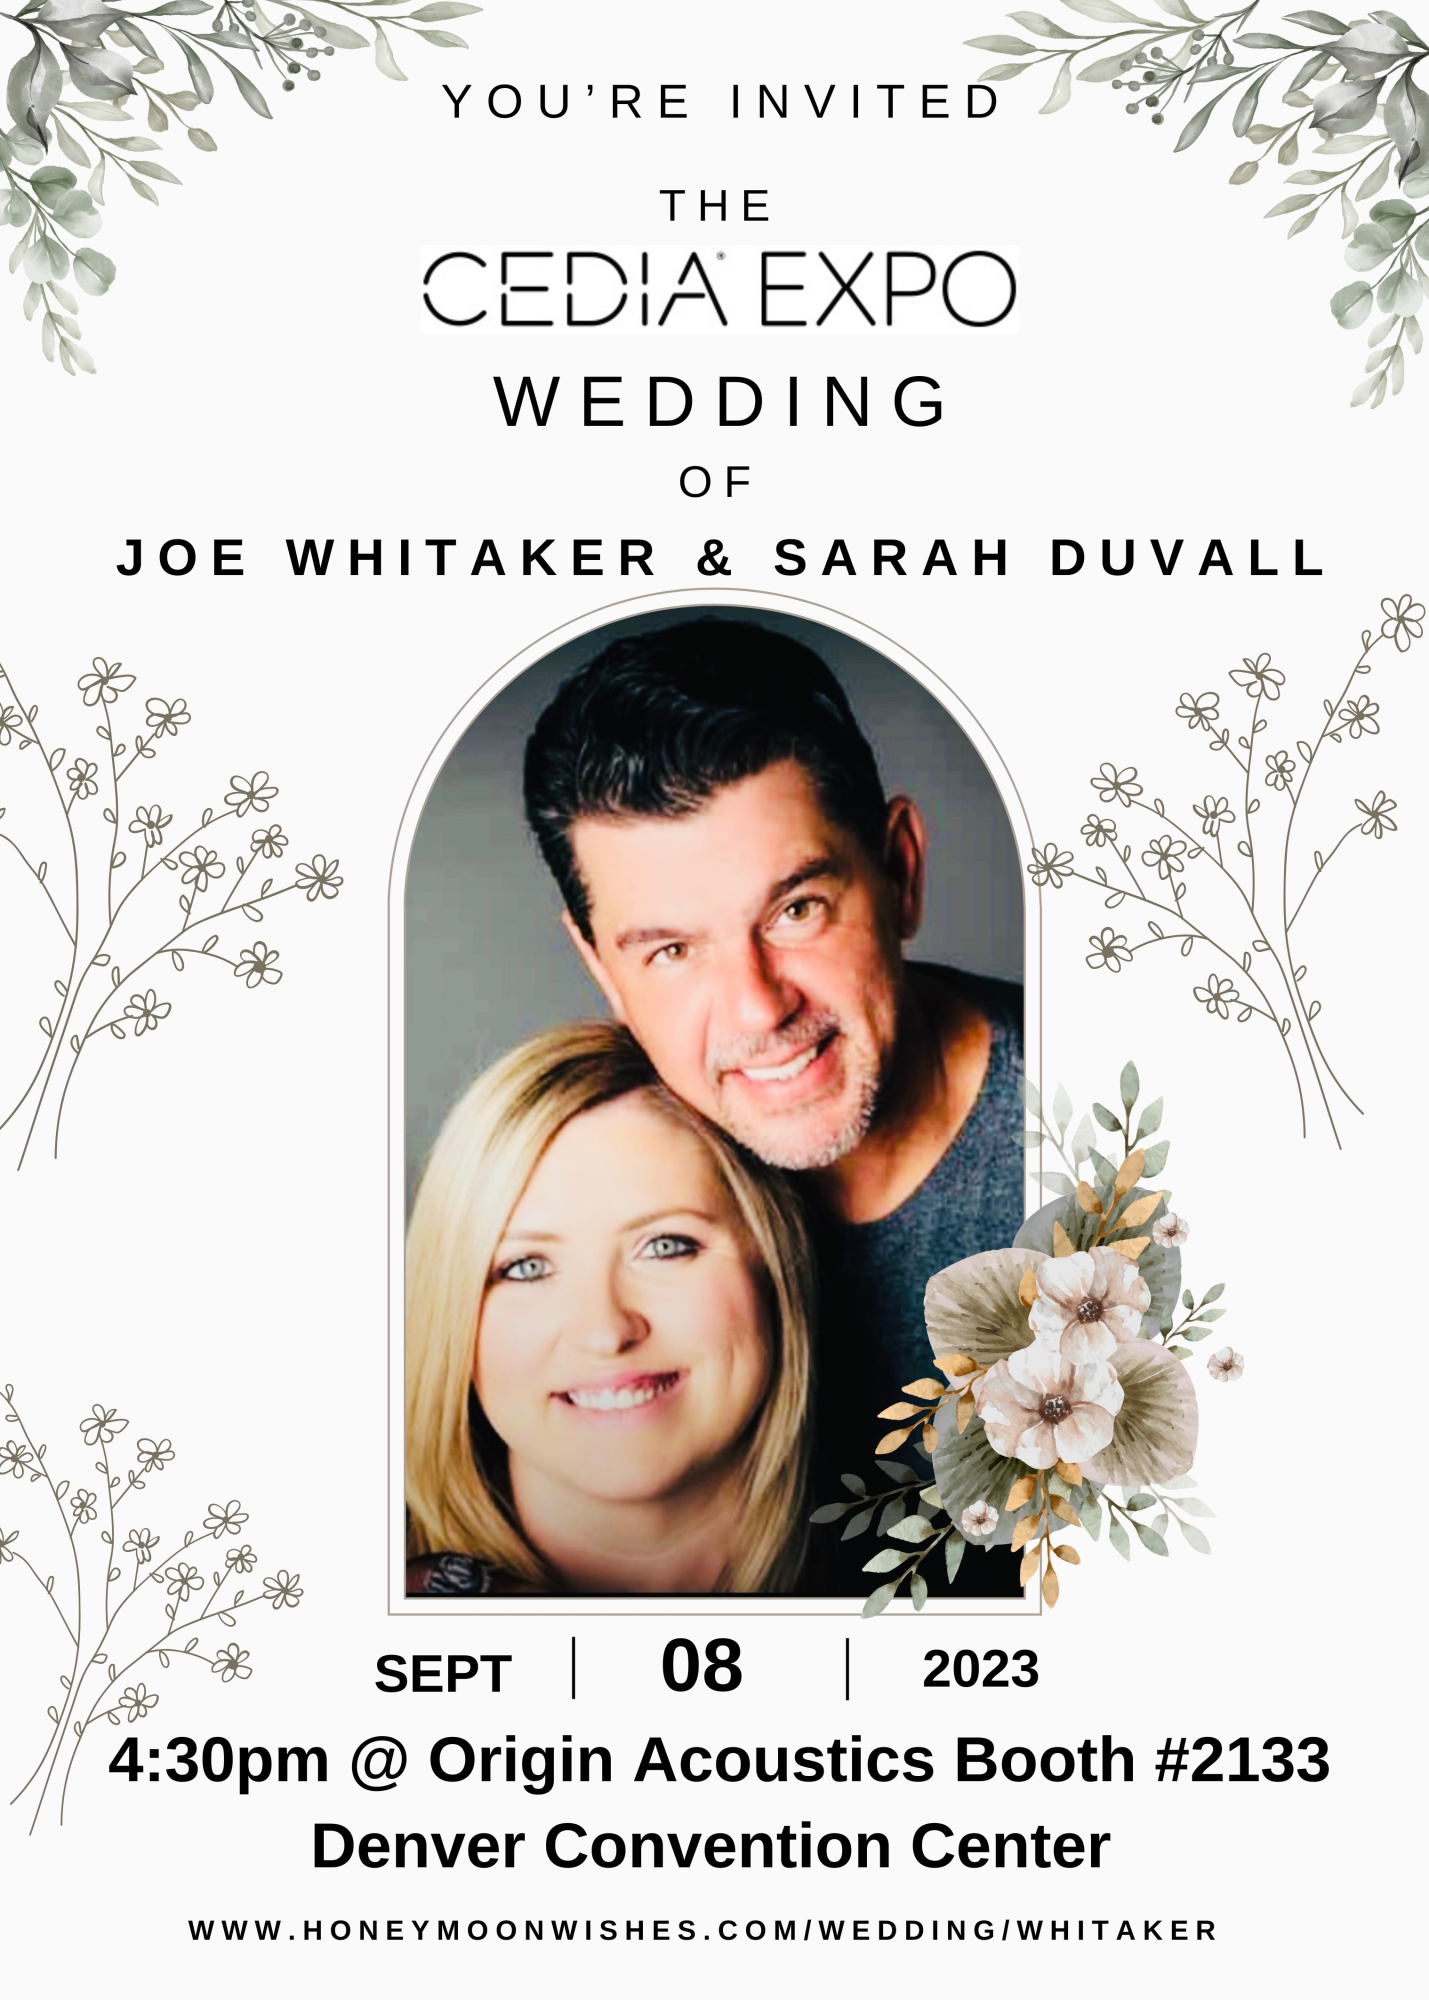 Joe Whitaker and Sarah Duvall to Wed at CEDIA Expo